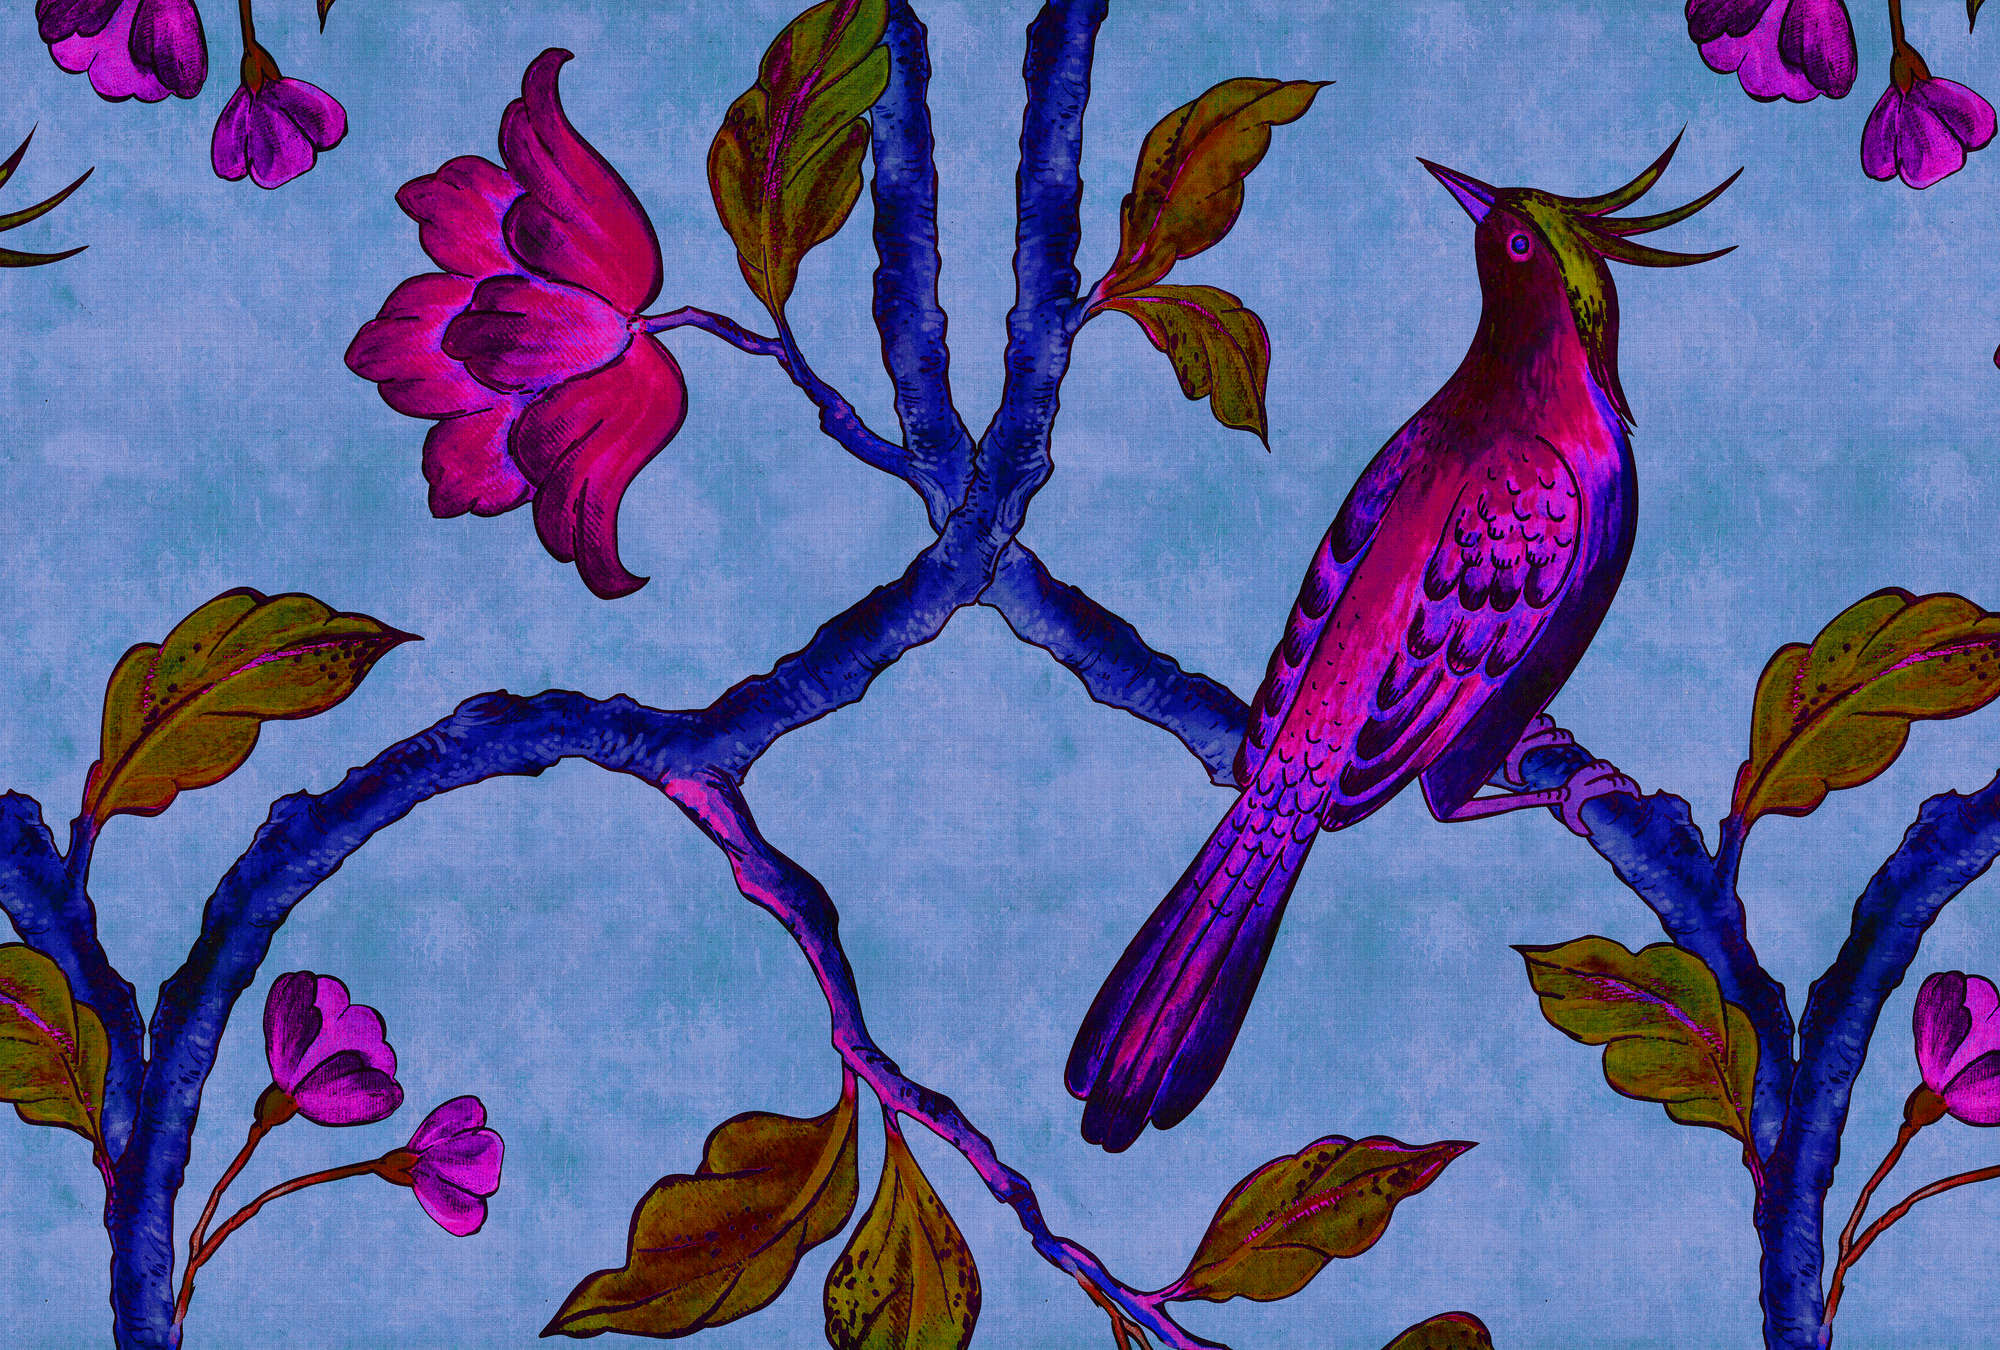             Bird Of Paradis 1 - Papel pintado con impresión digital en estructura de lino natural con ave del paraíso - Azul, Violeta | Tela no tejida lisa mate
        